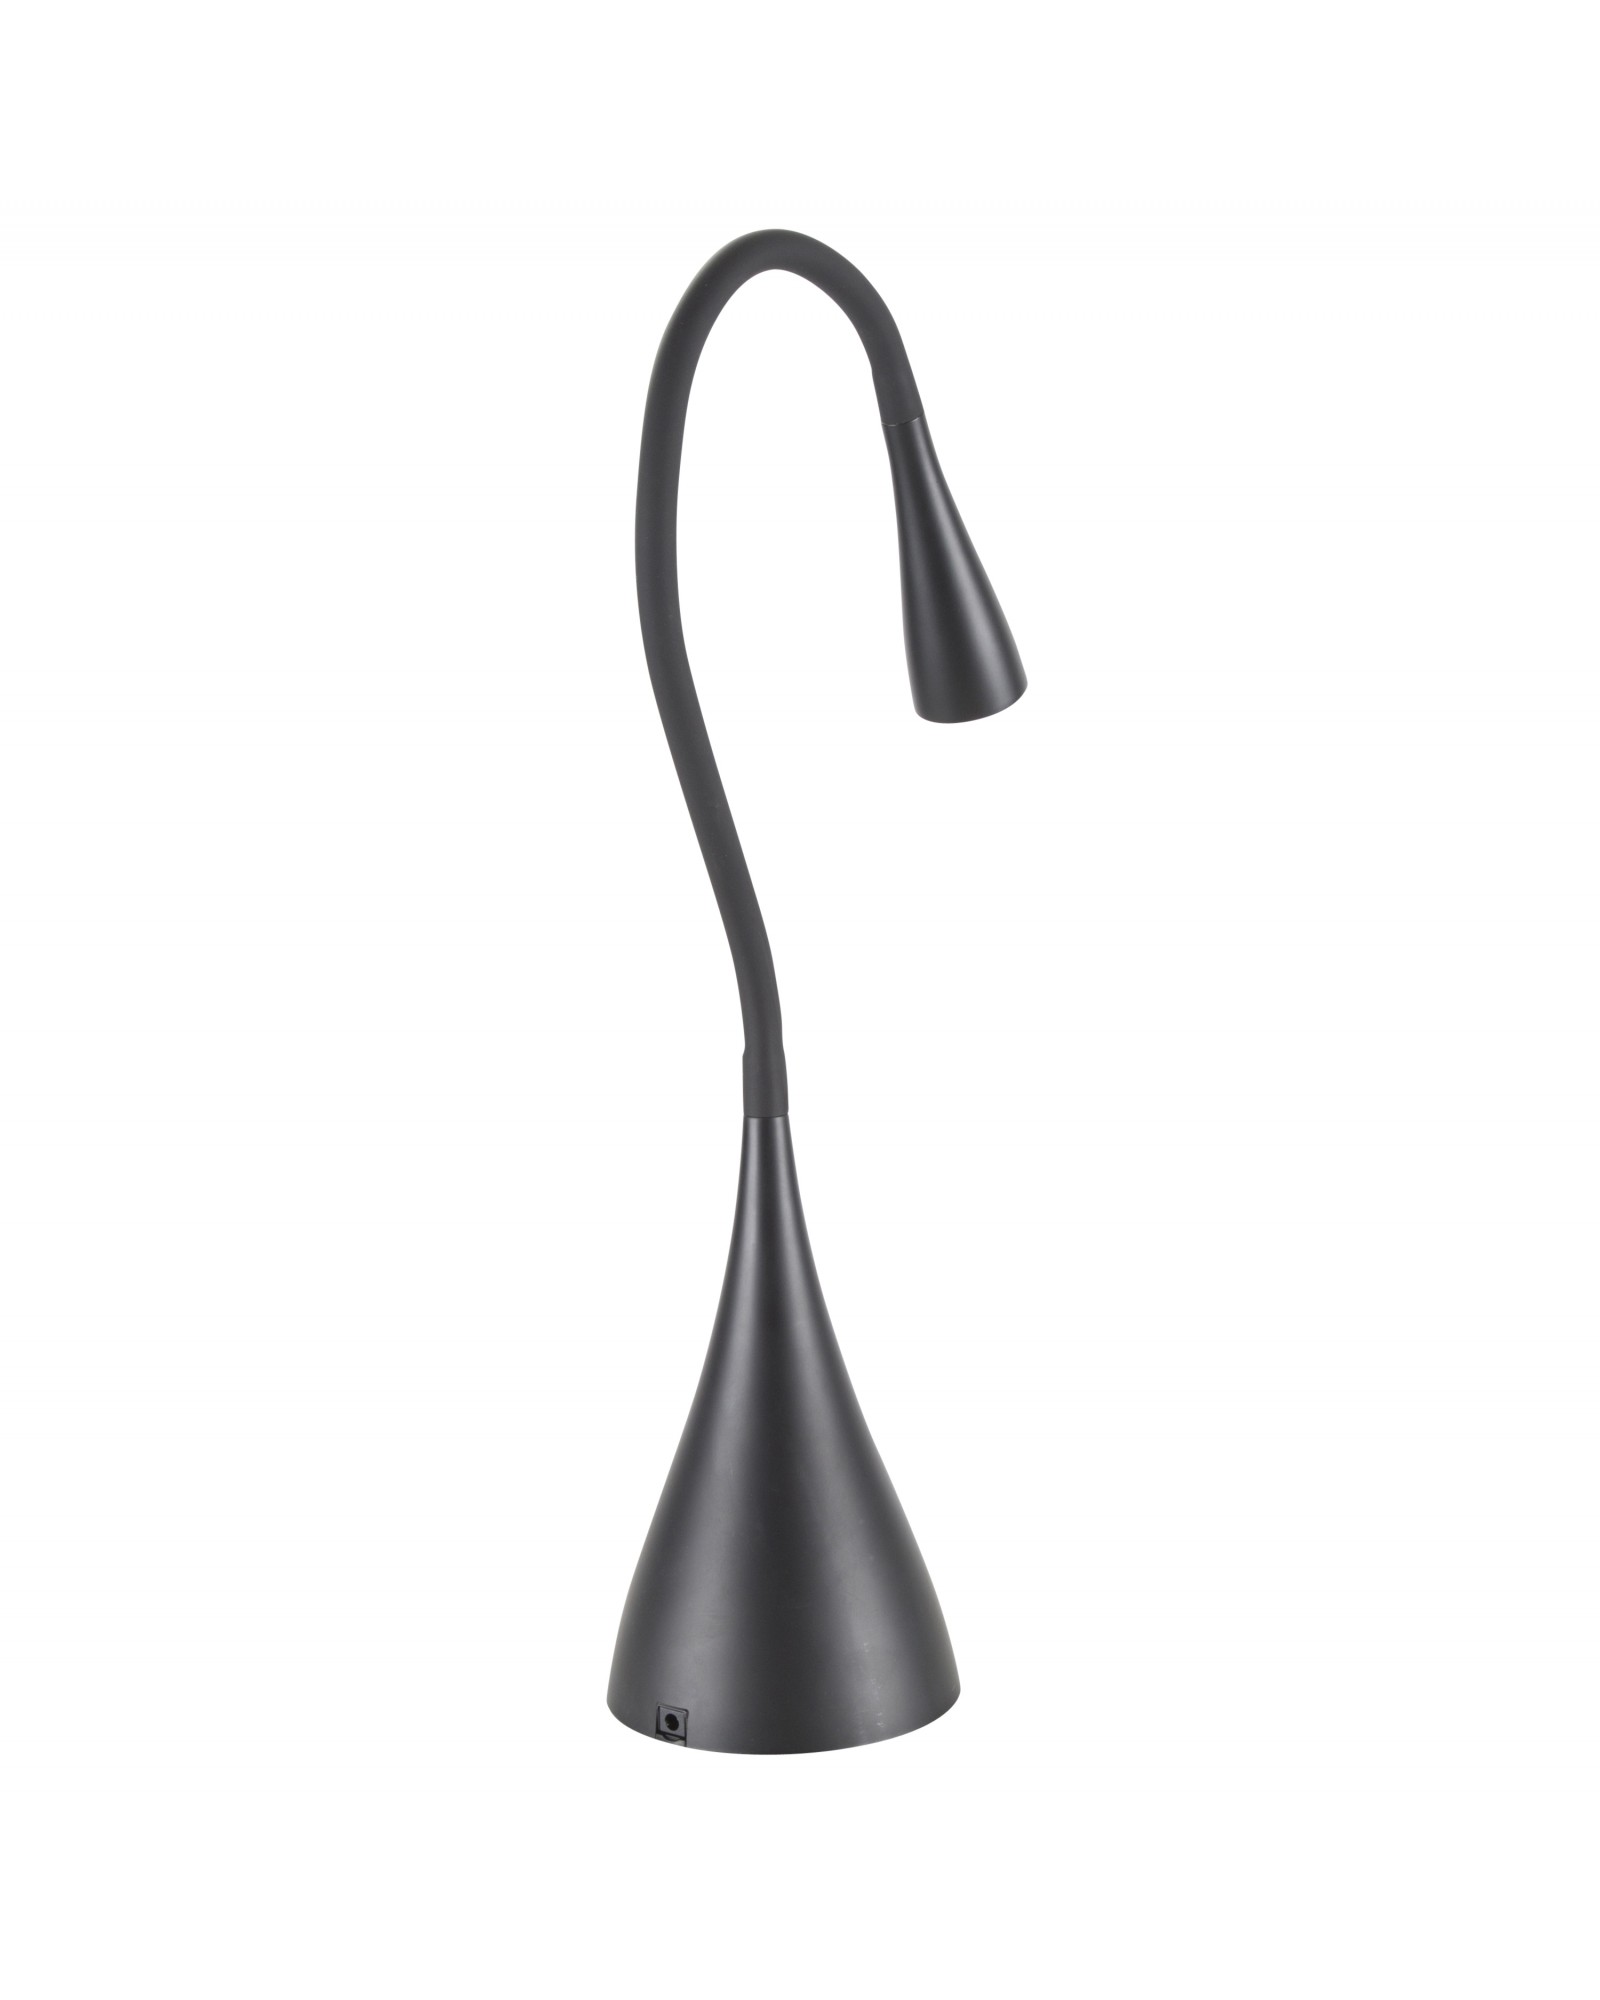 Gripp Contemporary Desk Lamp in Black